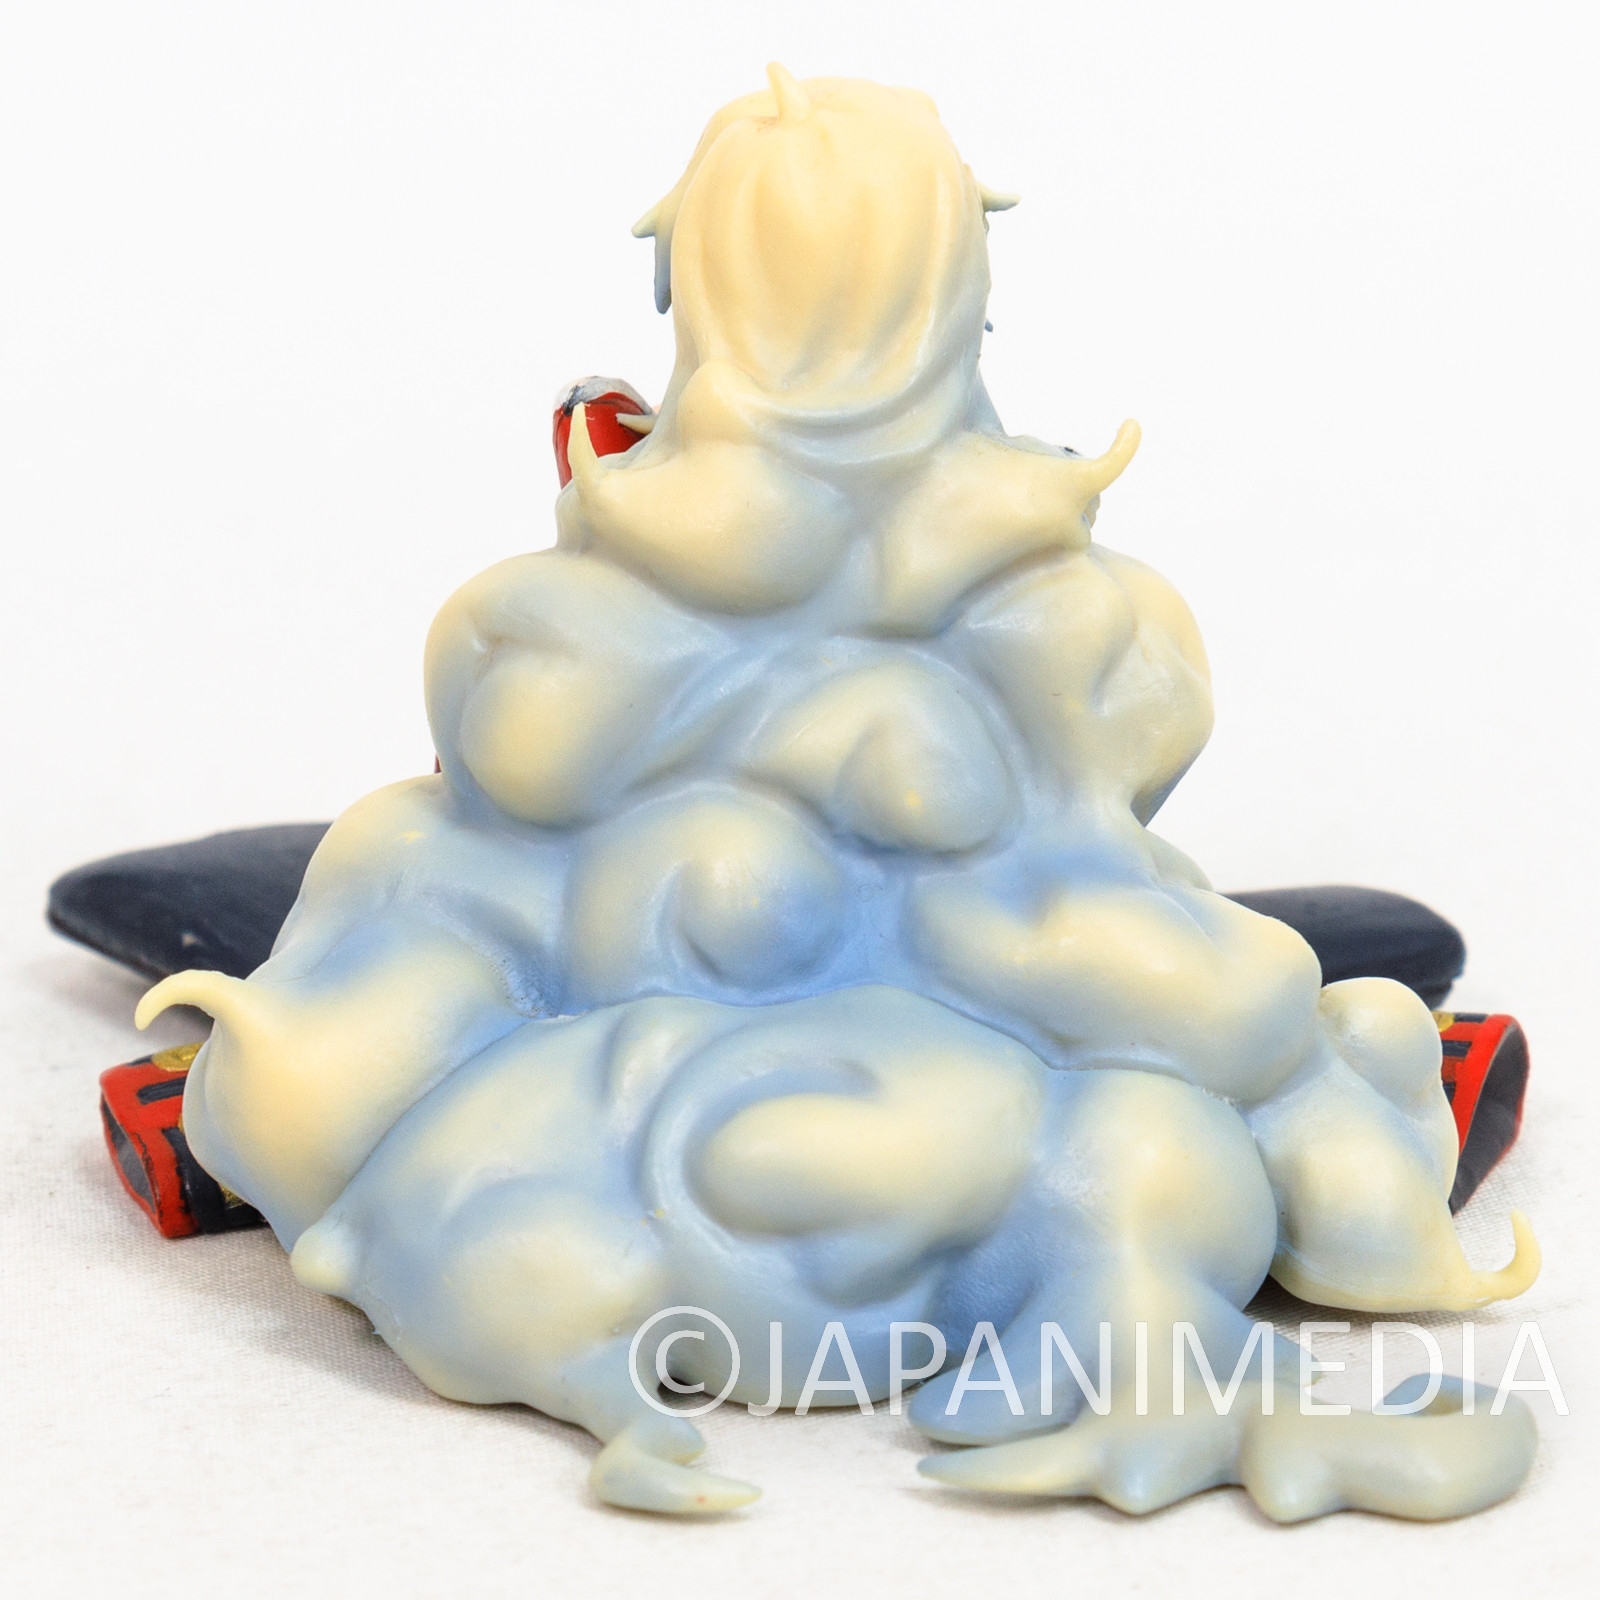 RARE! Gurren Lagann Kamina Super Modeling Soul Figure Bandai JAPAN ANIME  GAINAX - Japanimedia Store